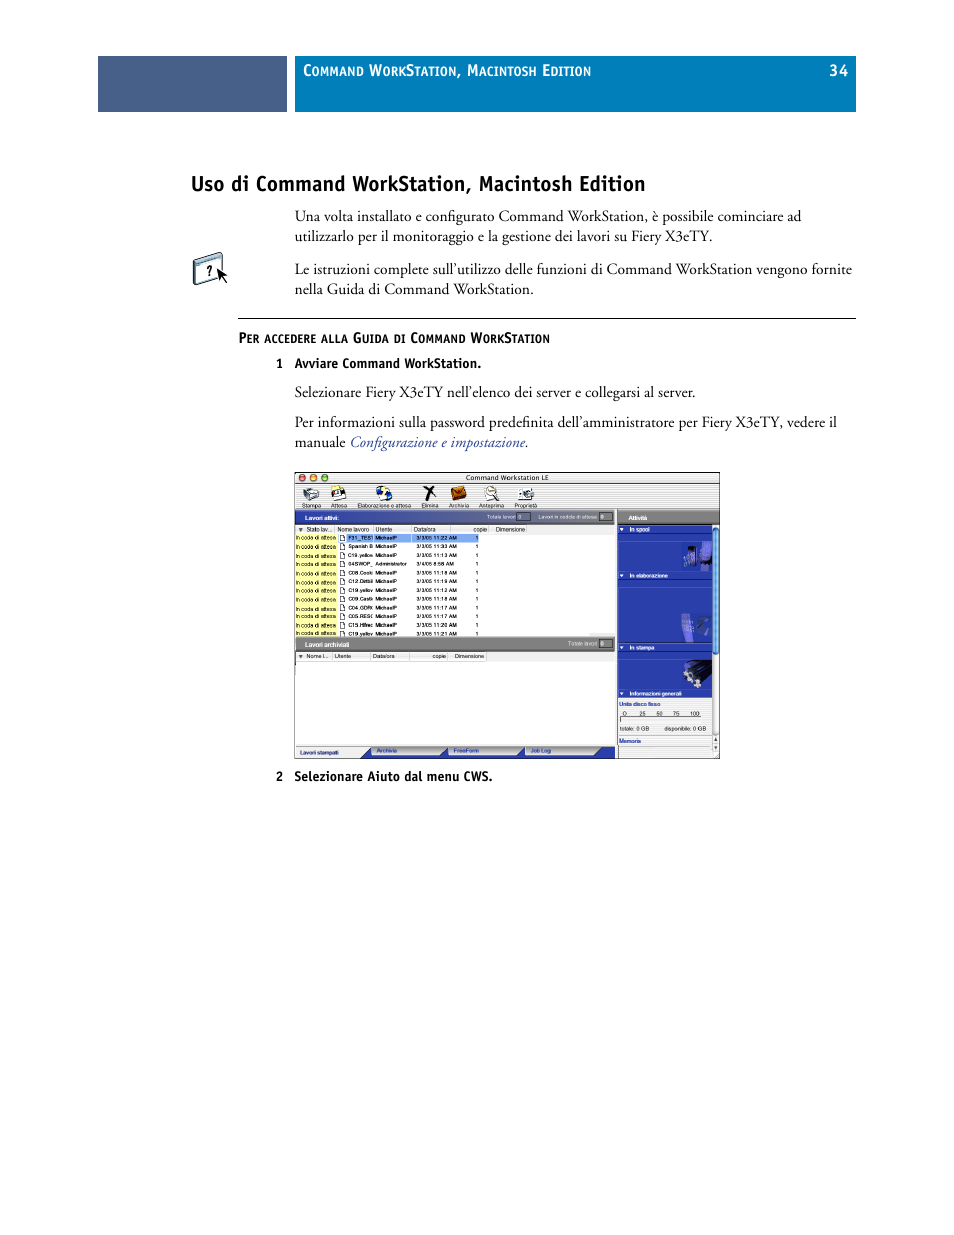 Uso di command workstation, macintosh edition | Konica Minolta IC-402 Manuale d'uso | Pagina 34 / 88